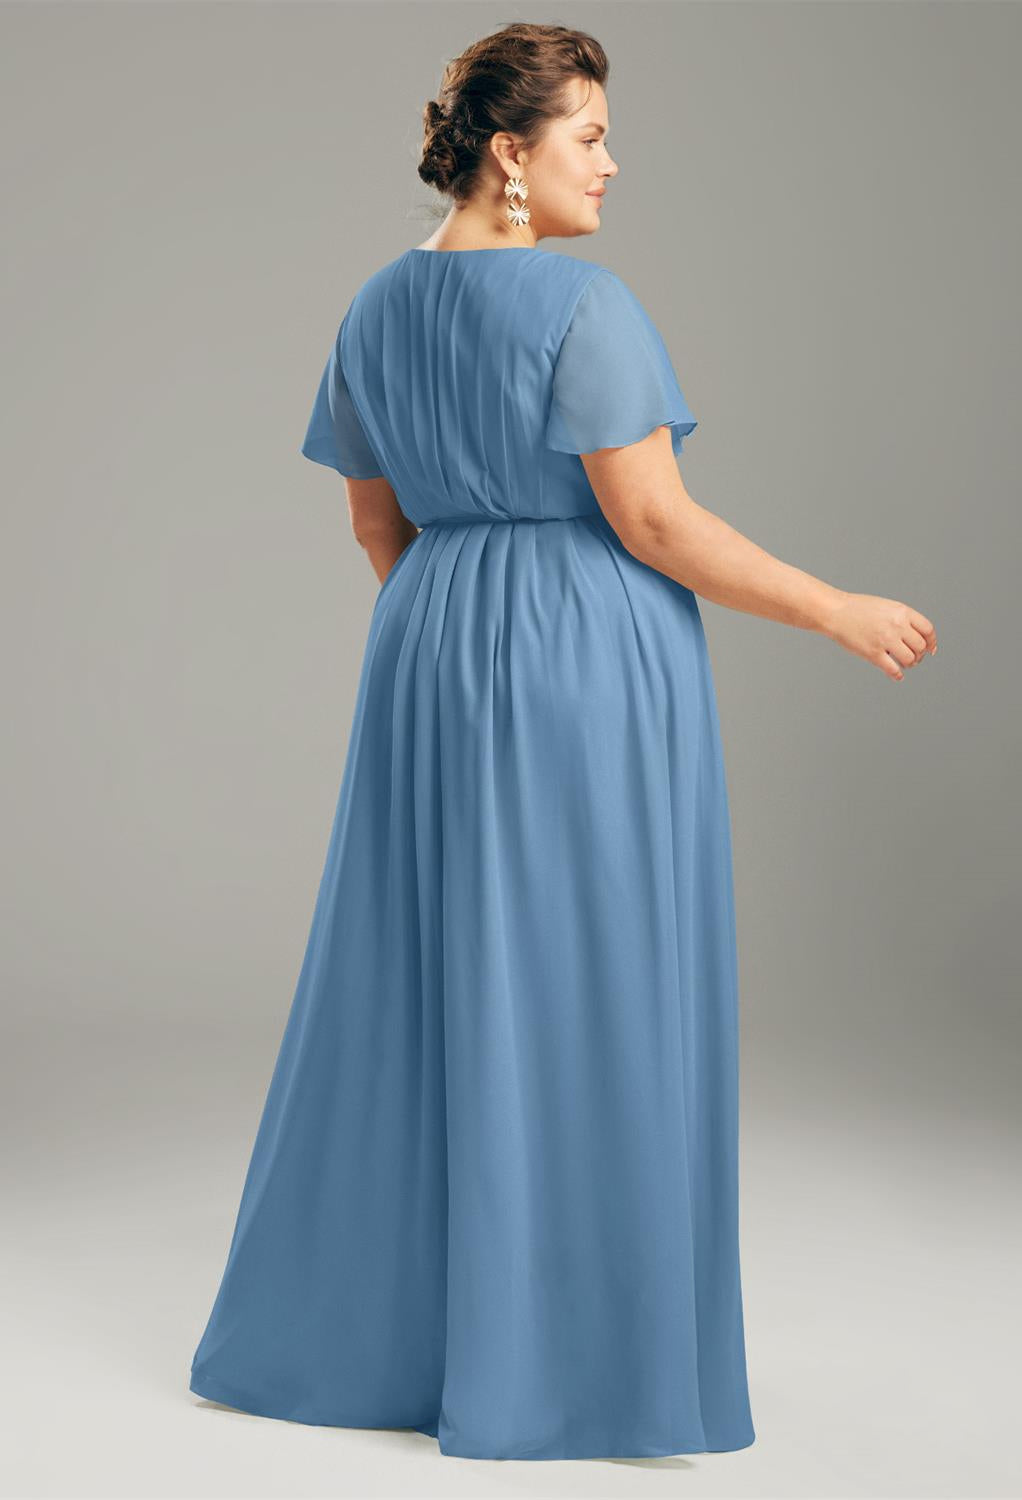 Ellison - Chiffon Bridesmaid Dress - Off The Rack available at Bergamot Bridal in London.